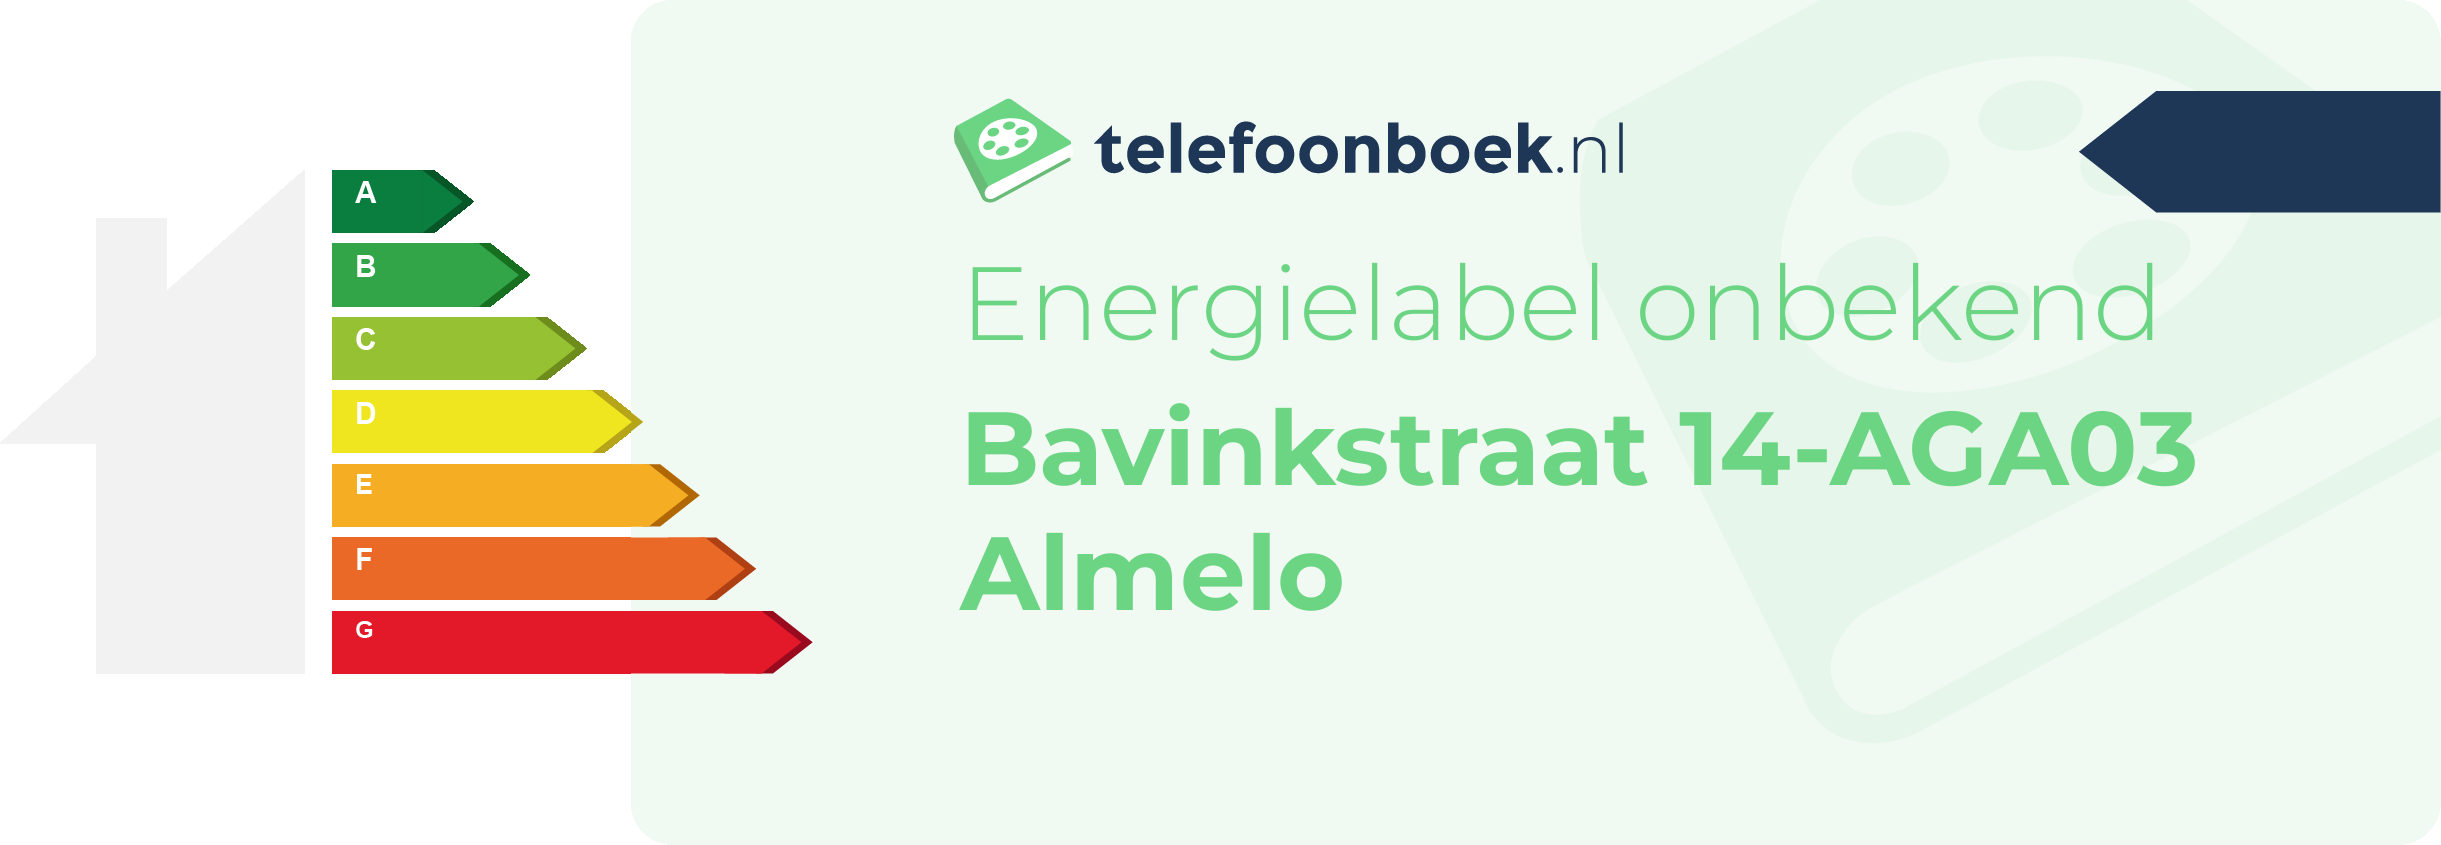 Energielabel Bavinkstraat 14-AGA03 Almelo